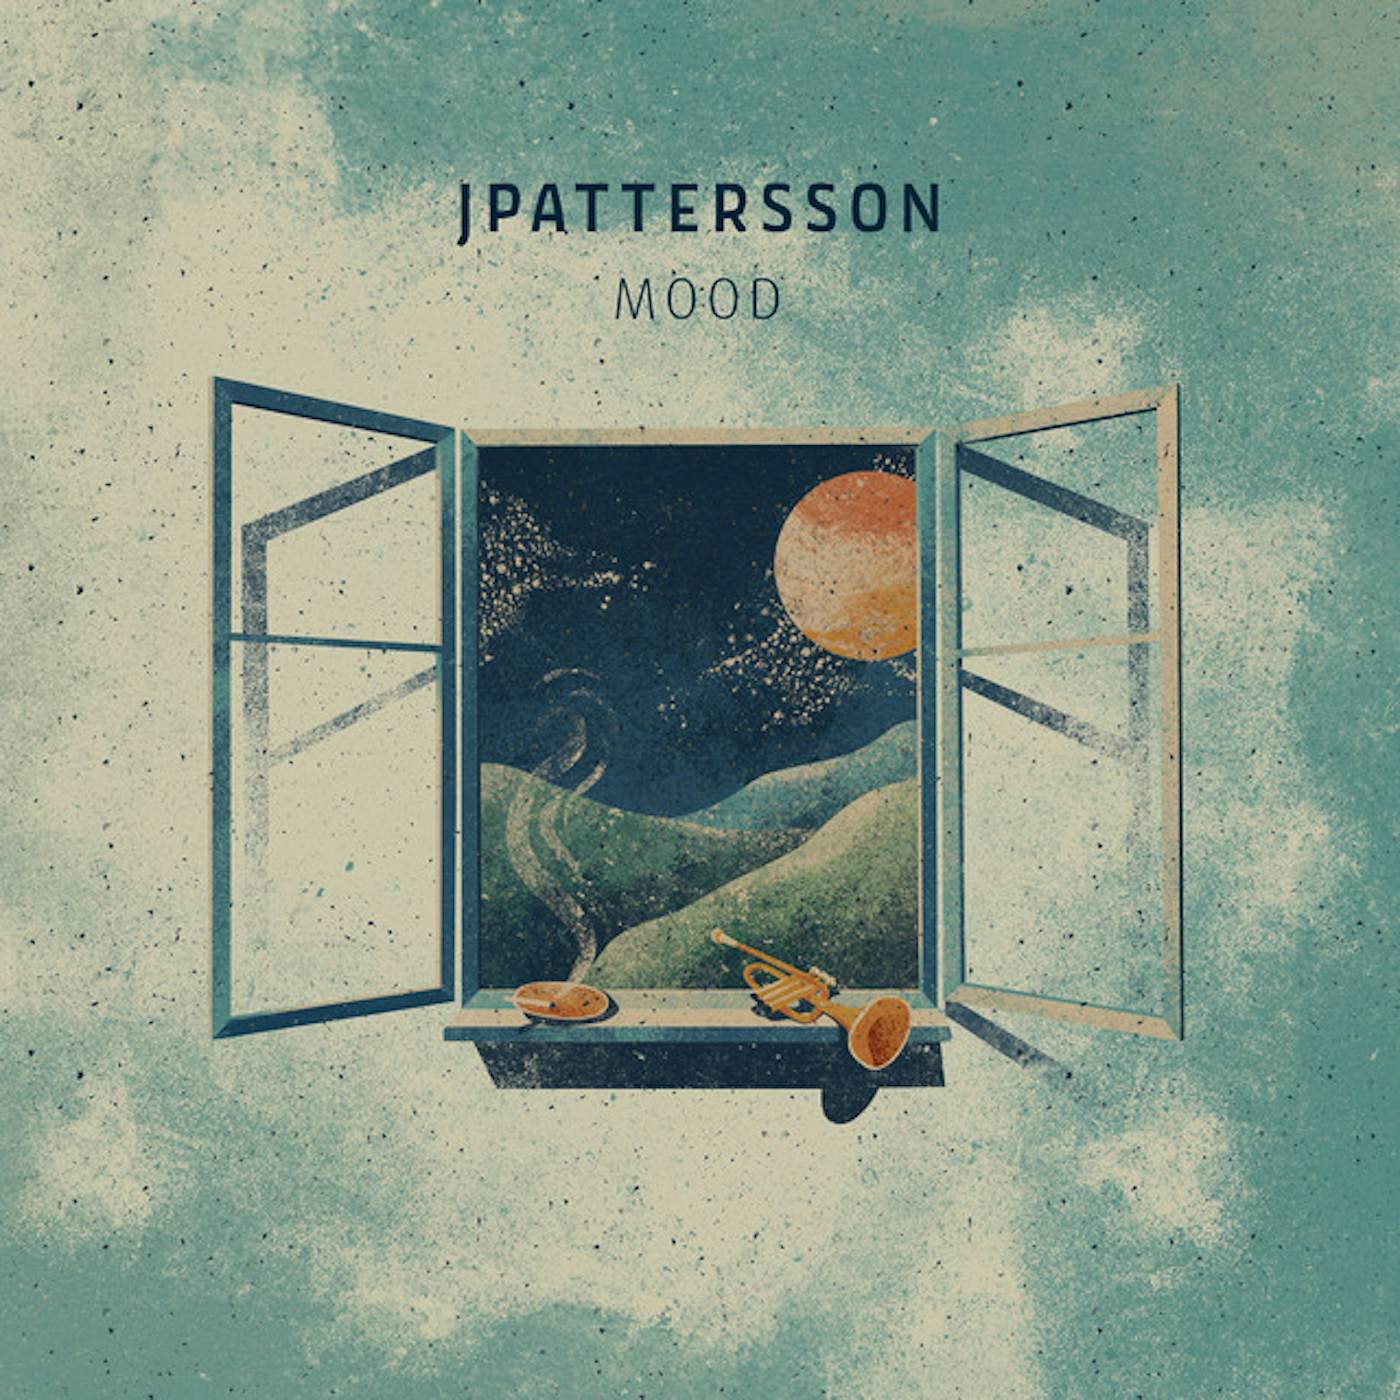 JPattersson MOOD CD